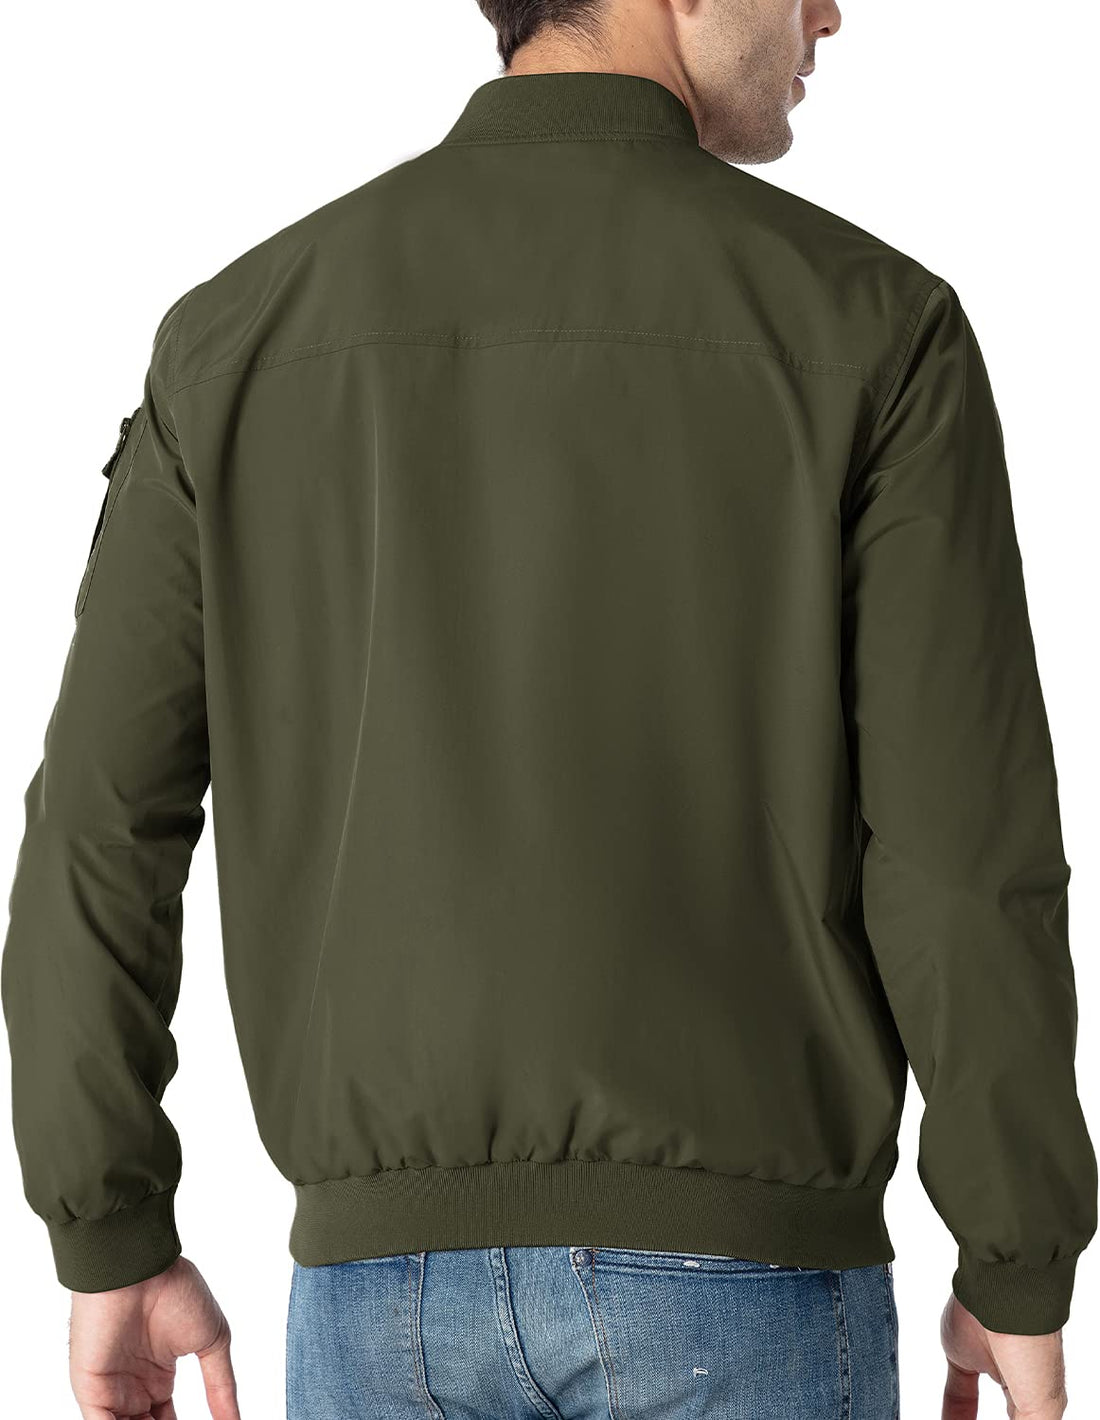 TBMPOY Men's Windproof Bomber Jackets Lightweight Running Windbreaker Outdoor Golf Fashion Coat, 7-dark Army Green, X-Large